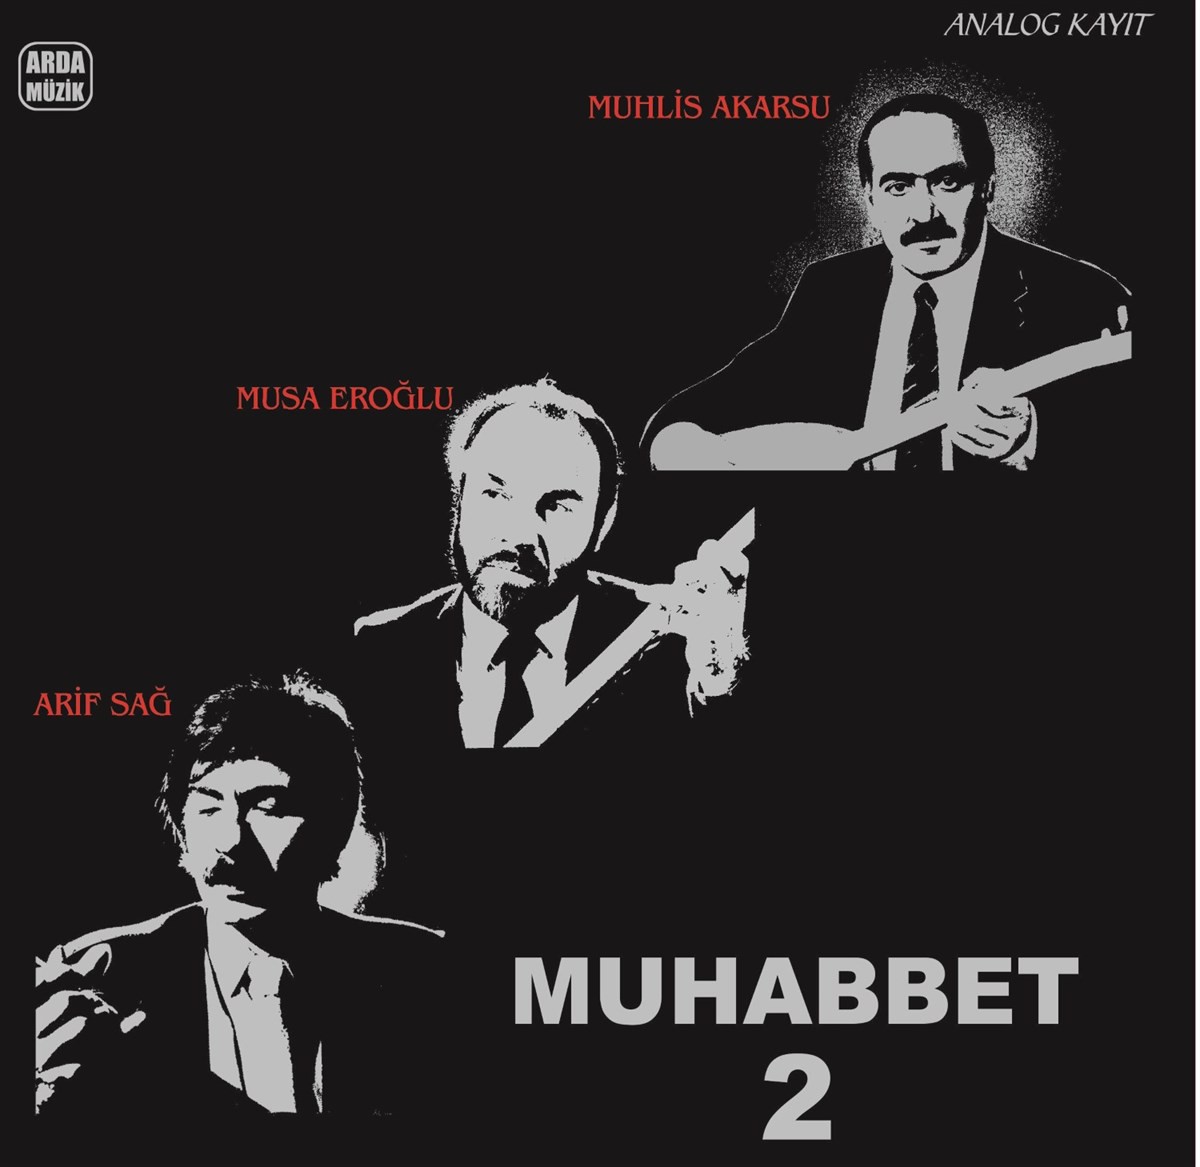 Arif Sağ, Musa Eroğlu, Muhlis Akarsu-Muhabbet 2